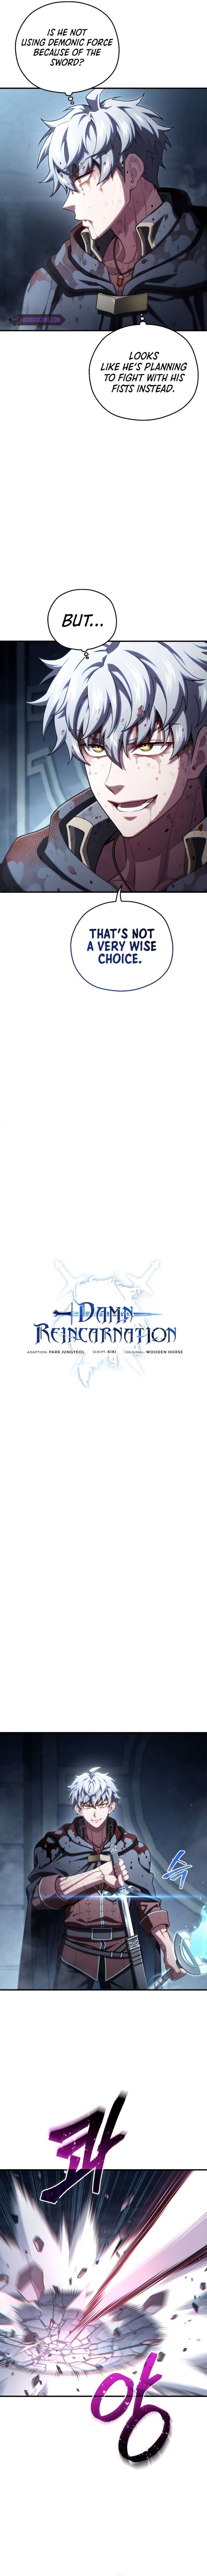 Damn Reincarnation 63 3